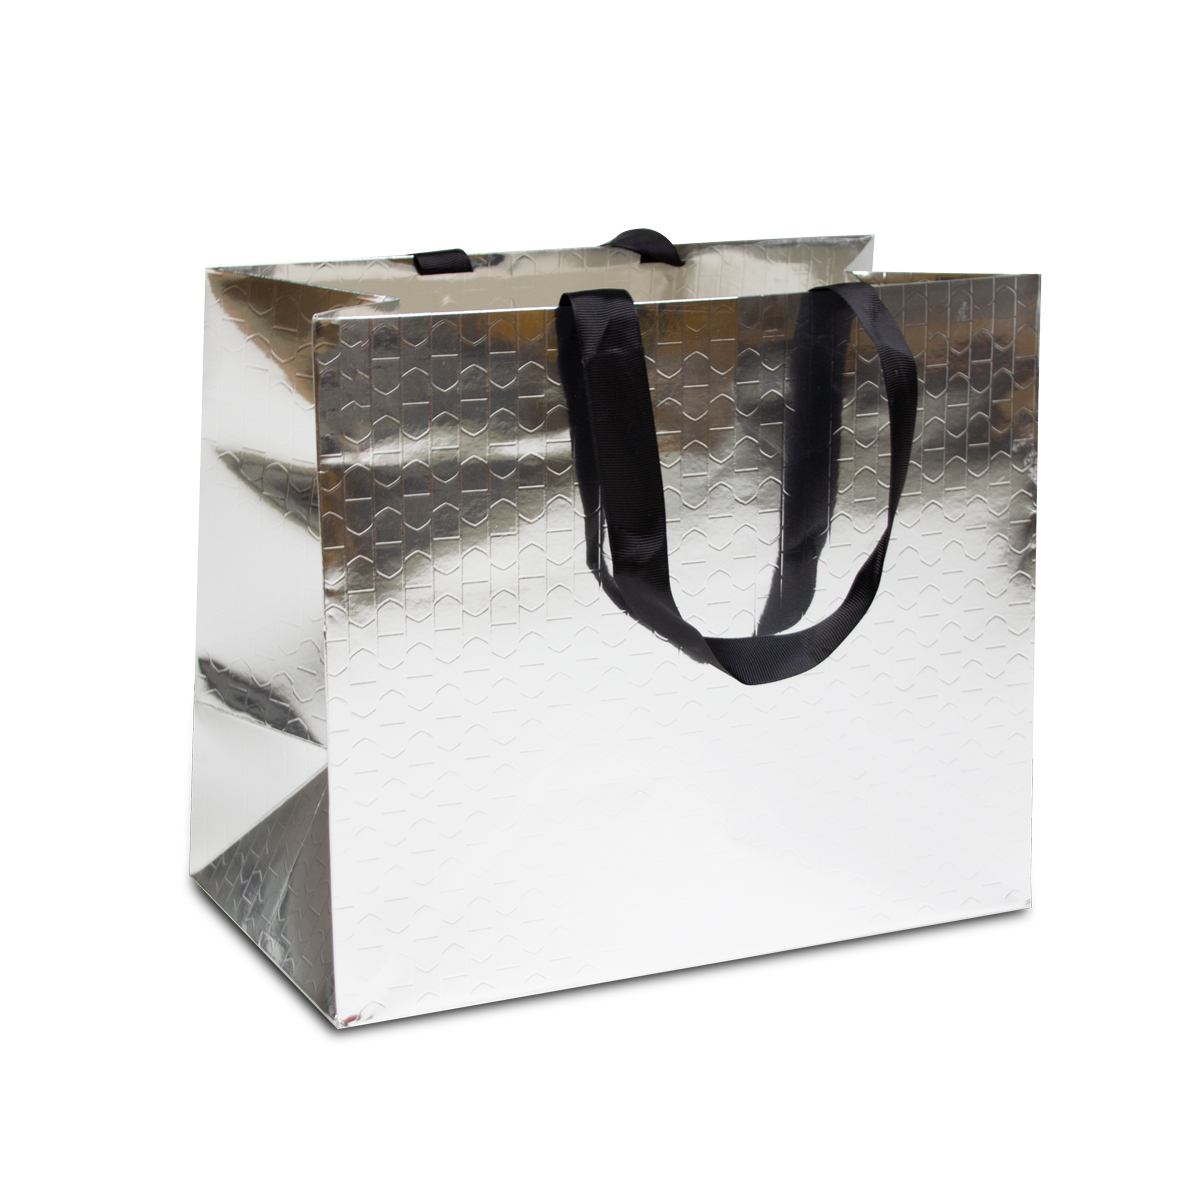 Luxury metallic paper bags 